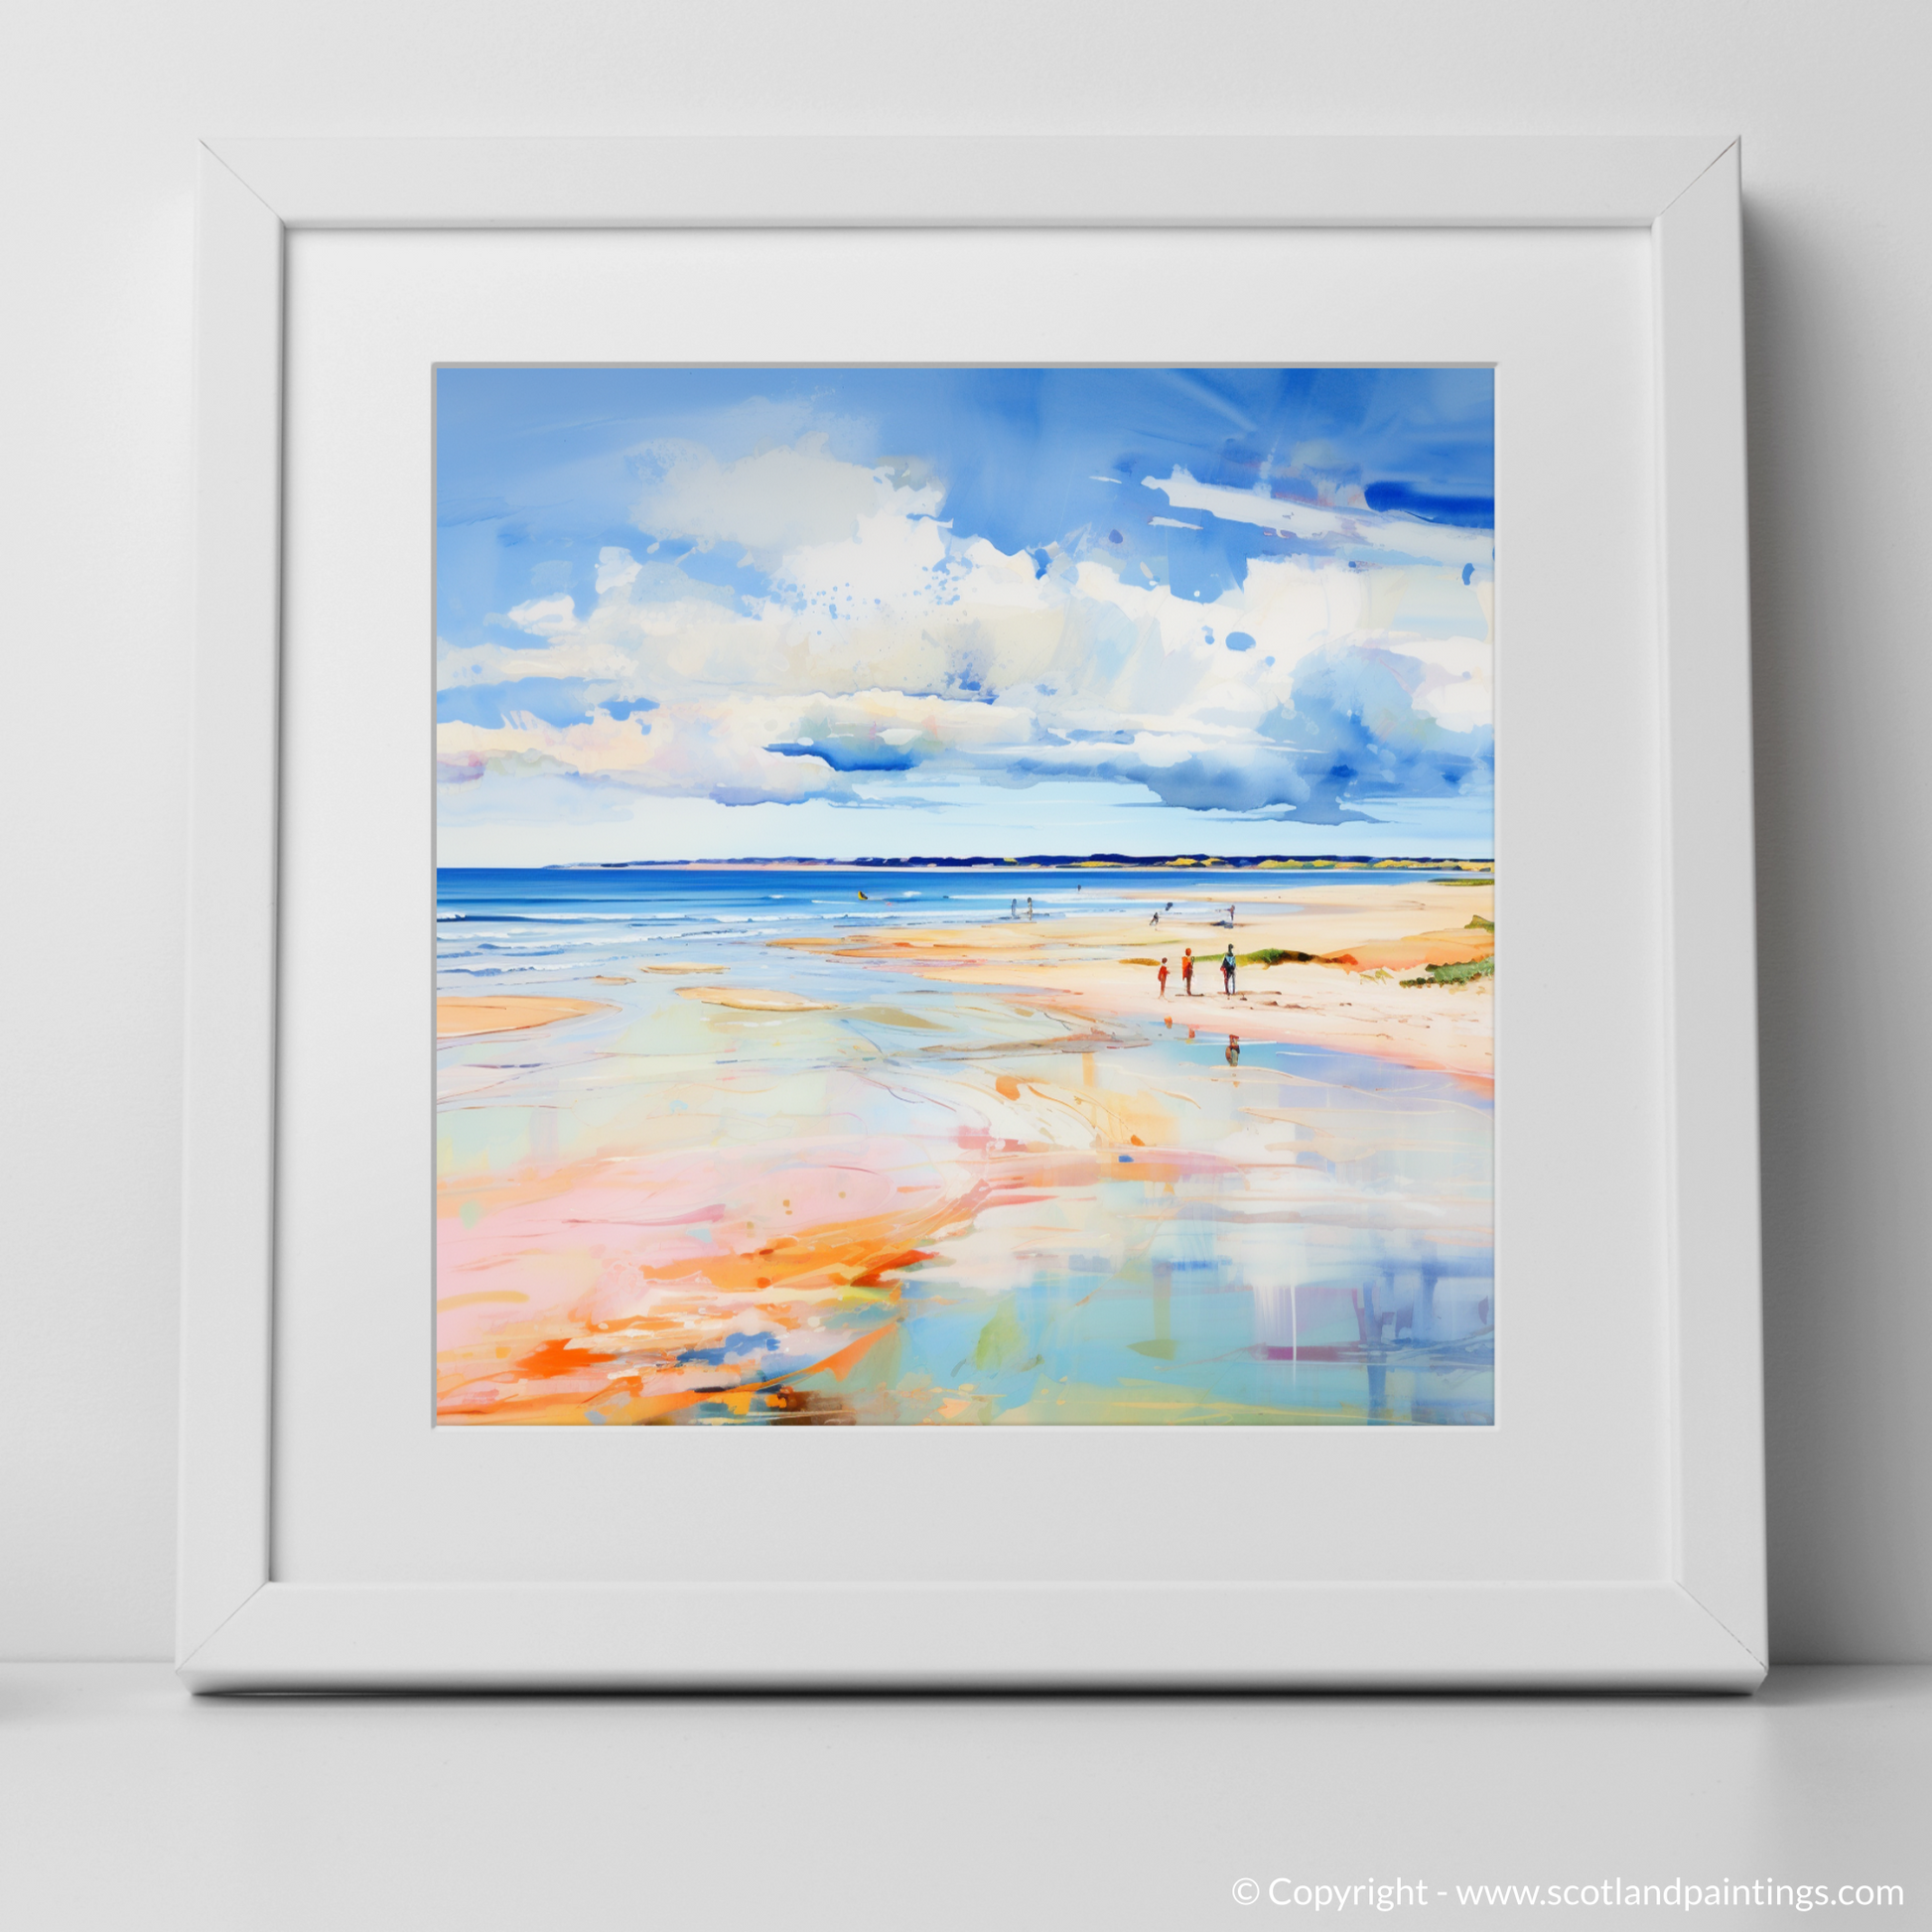 Art Print of Nairn Beach, Nairn in summer with a white frame